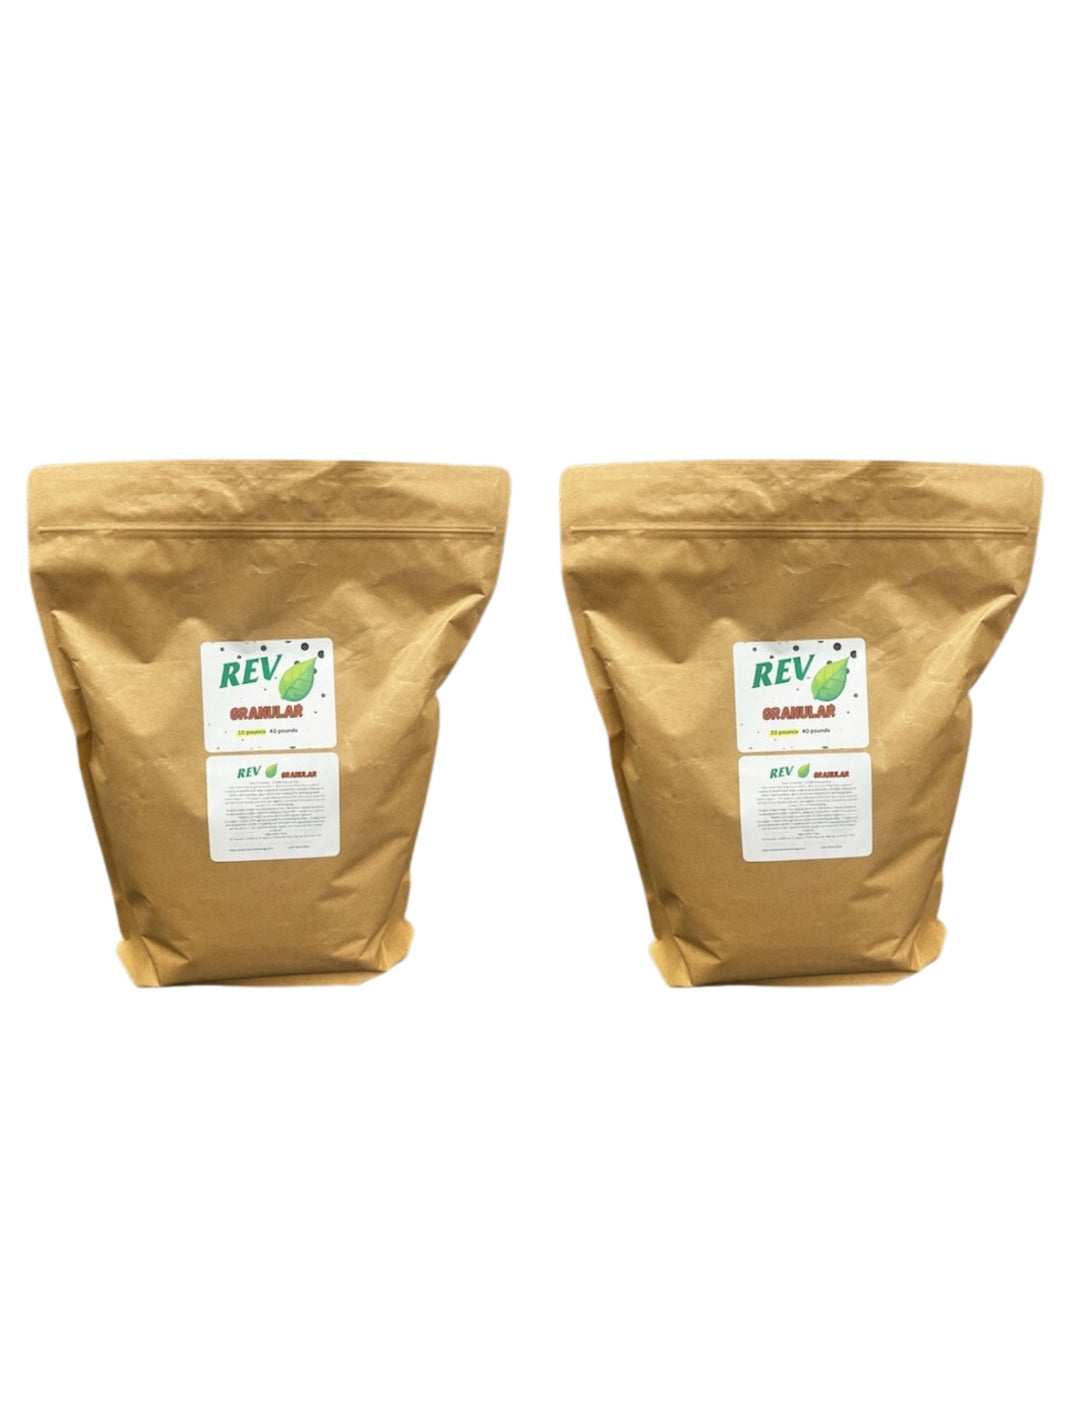 2 x 10 Pound Bags of REV Granular 1.5 MM Dakota Peat Soil